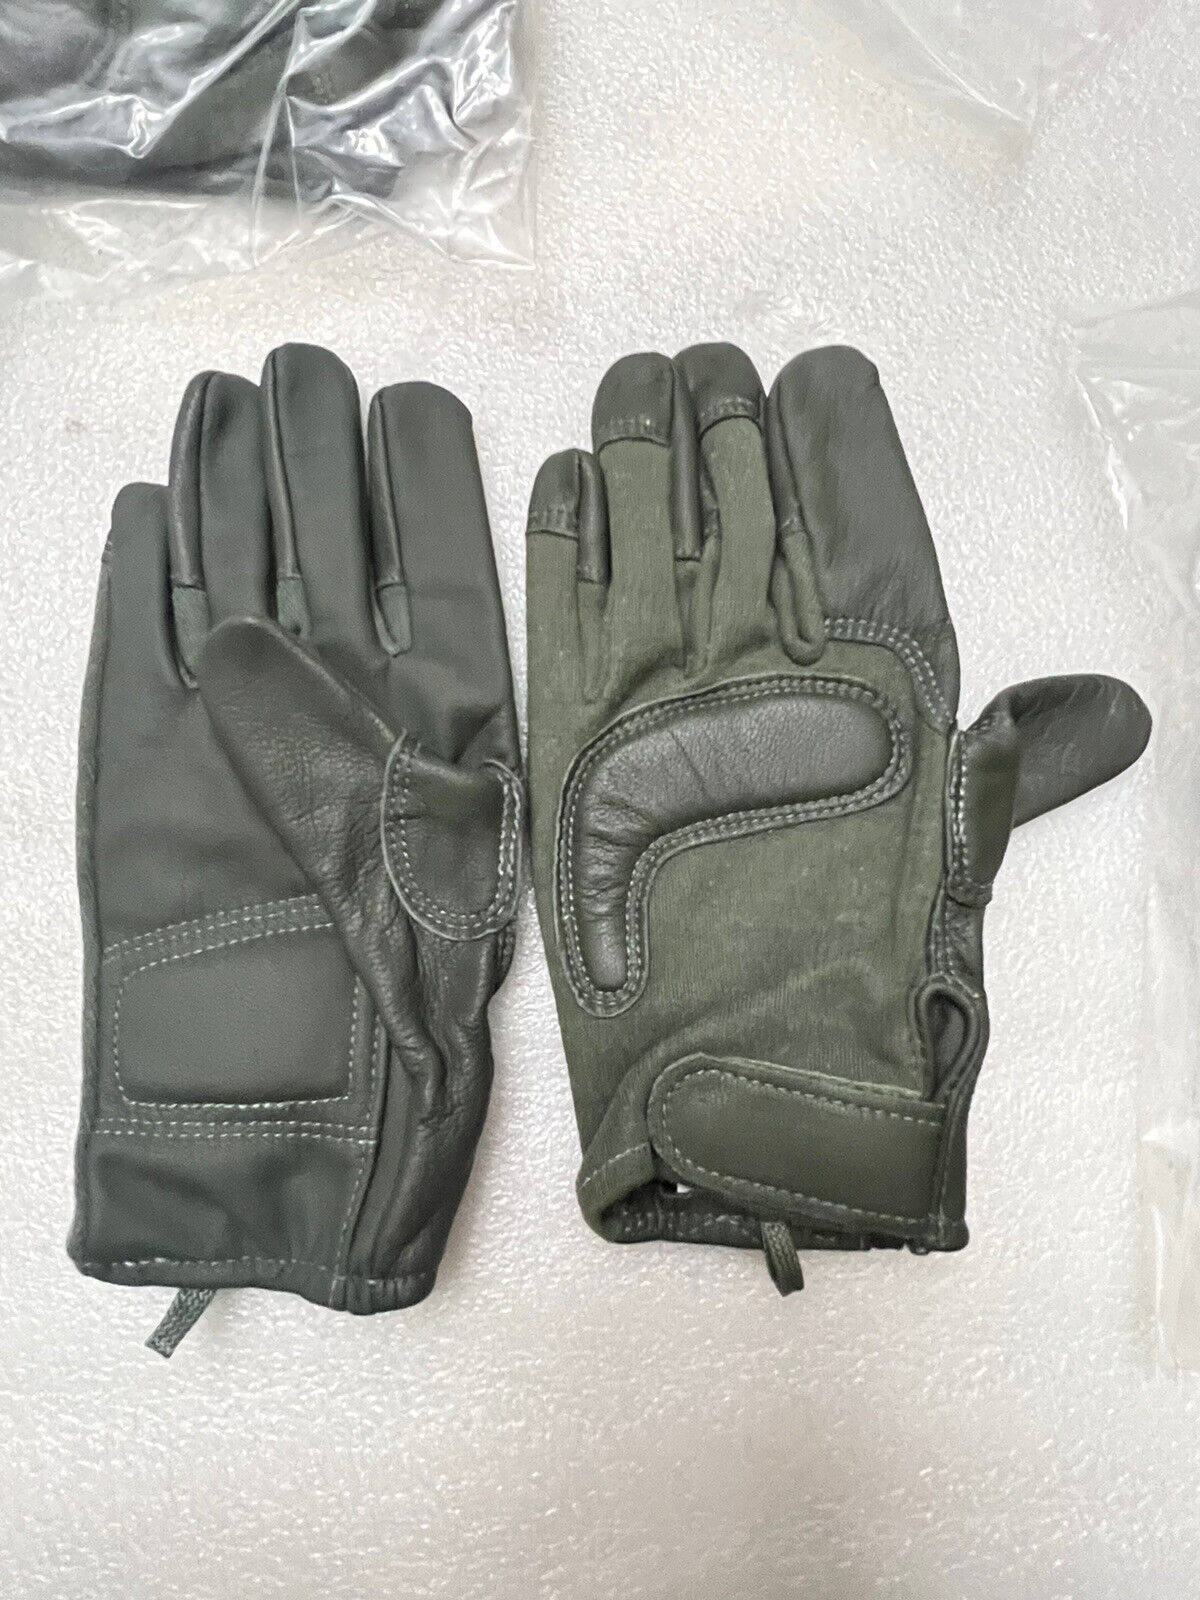 US. Army Combat Gloves Type II Capacitive Size Medium New